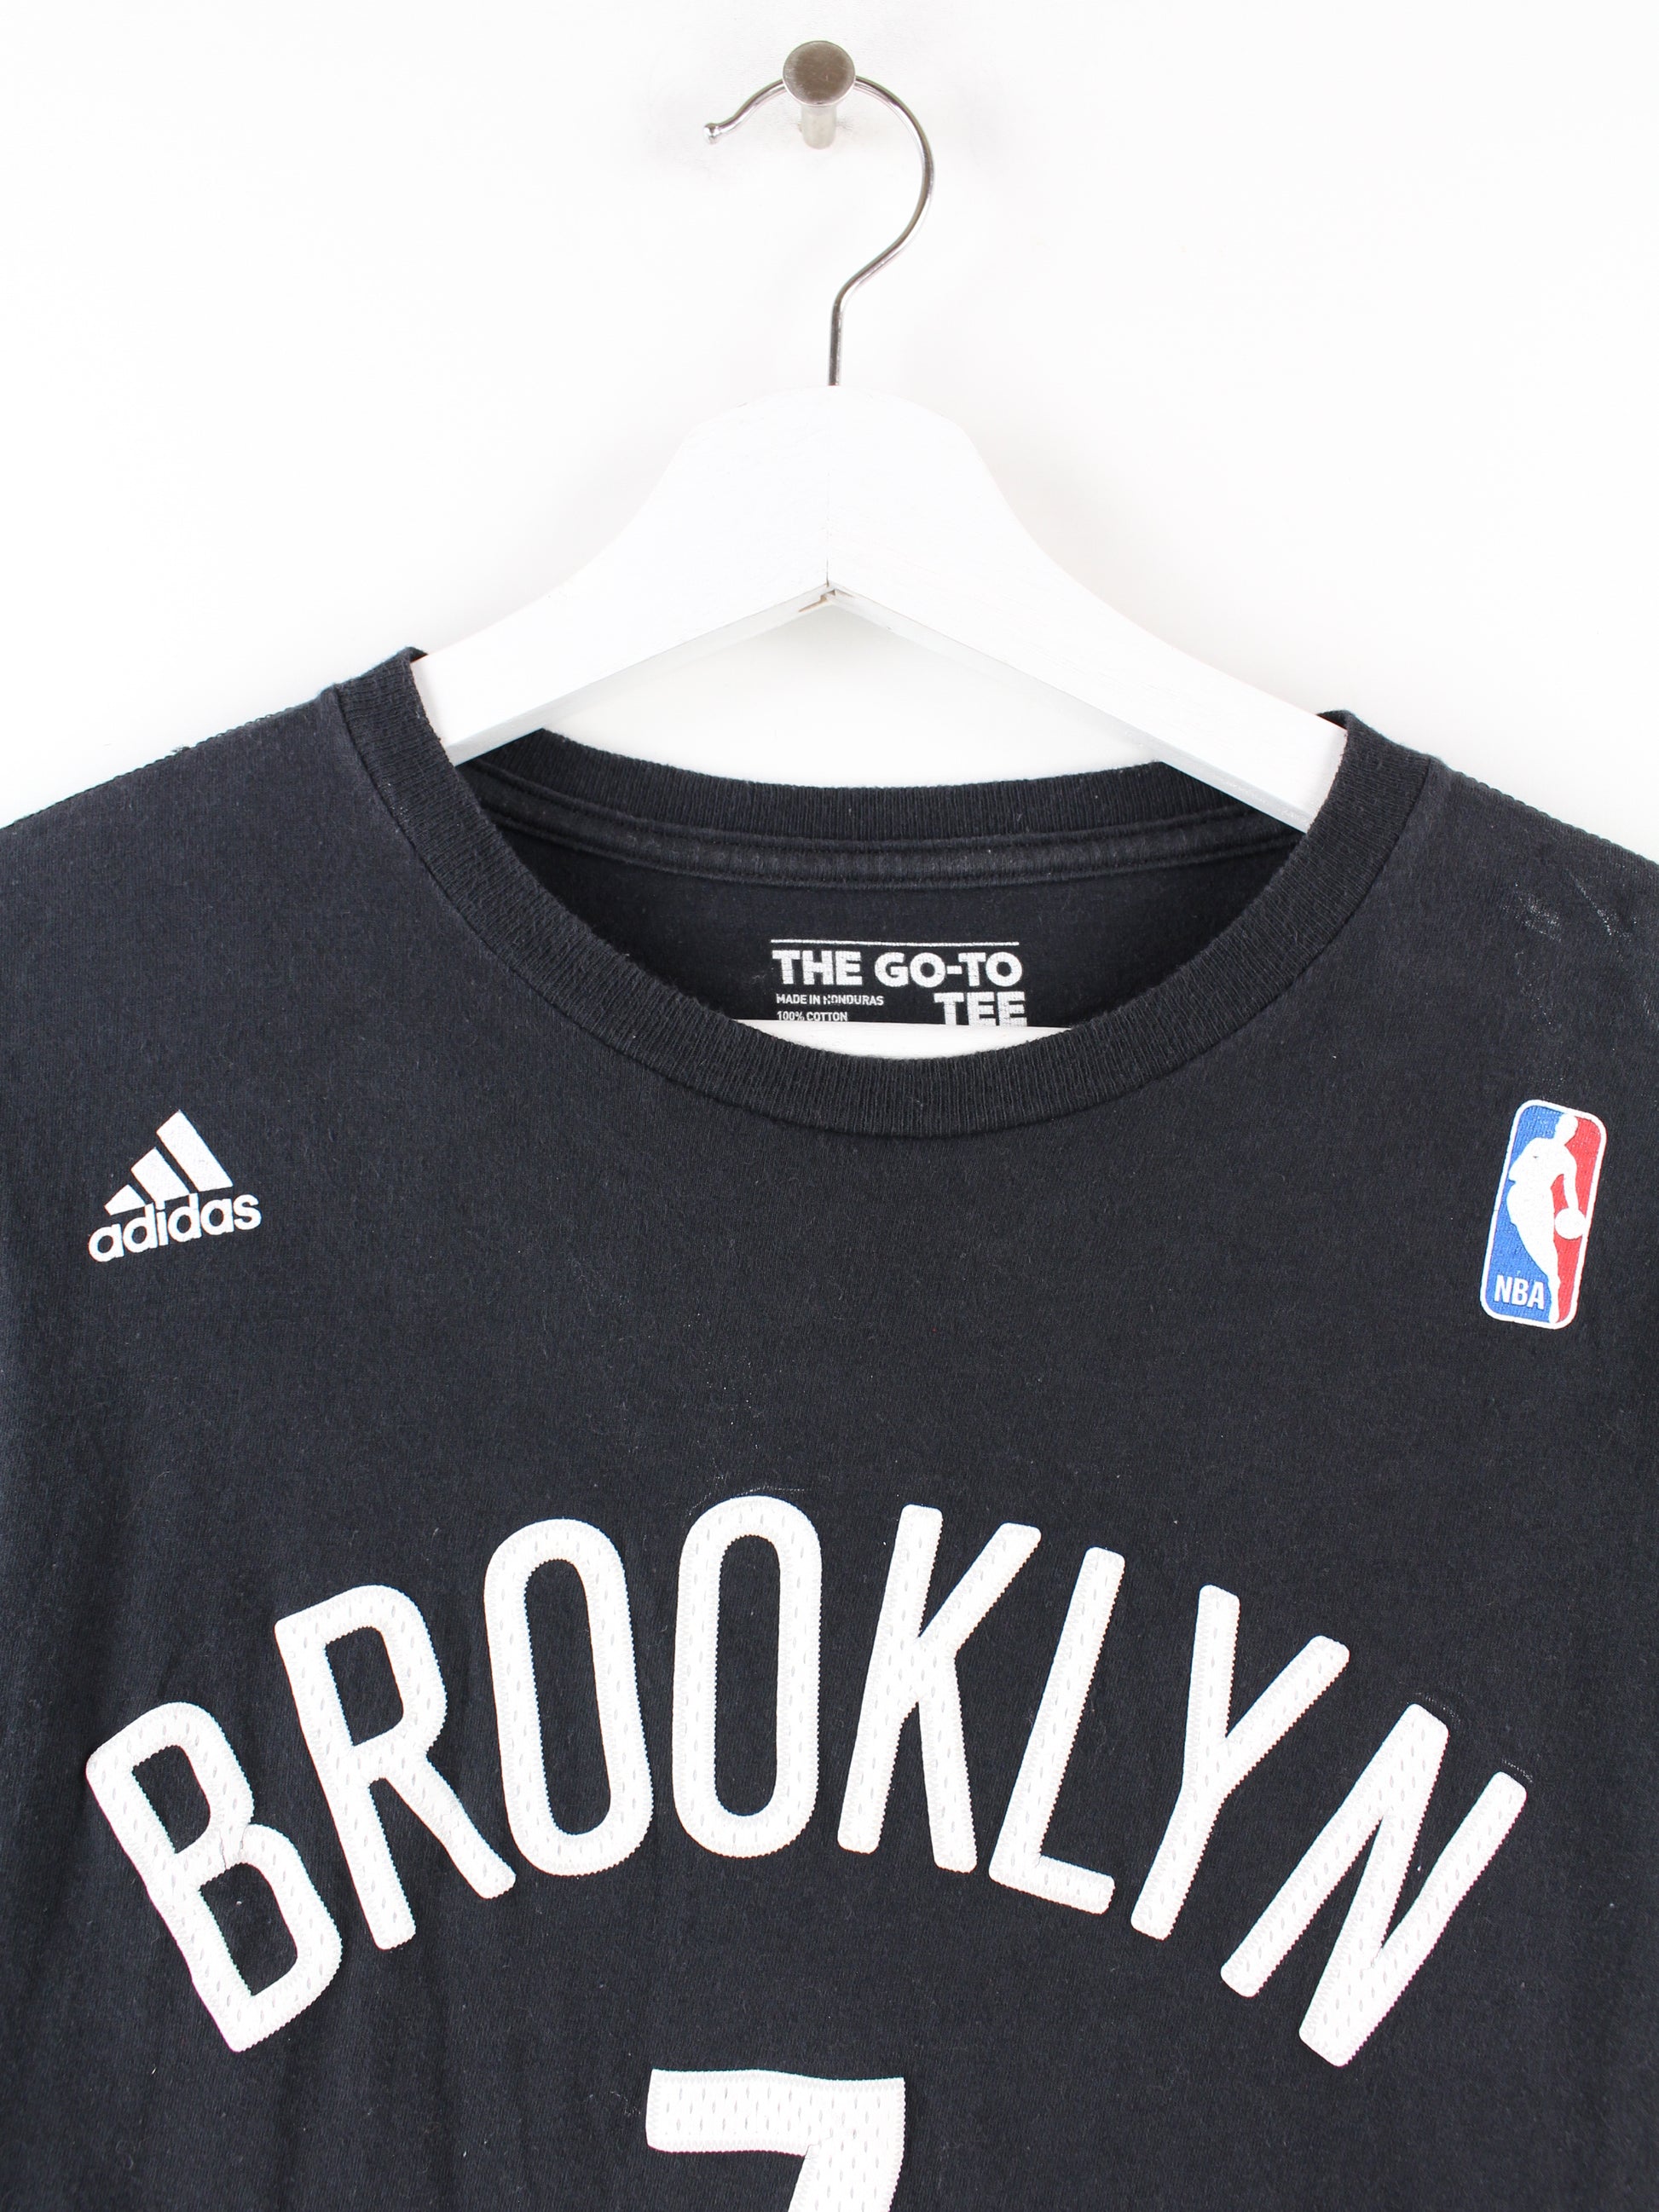 Adidas Nba Brooklyn T-Shirt Black S – Peeces